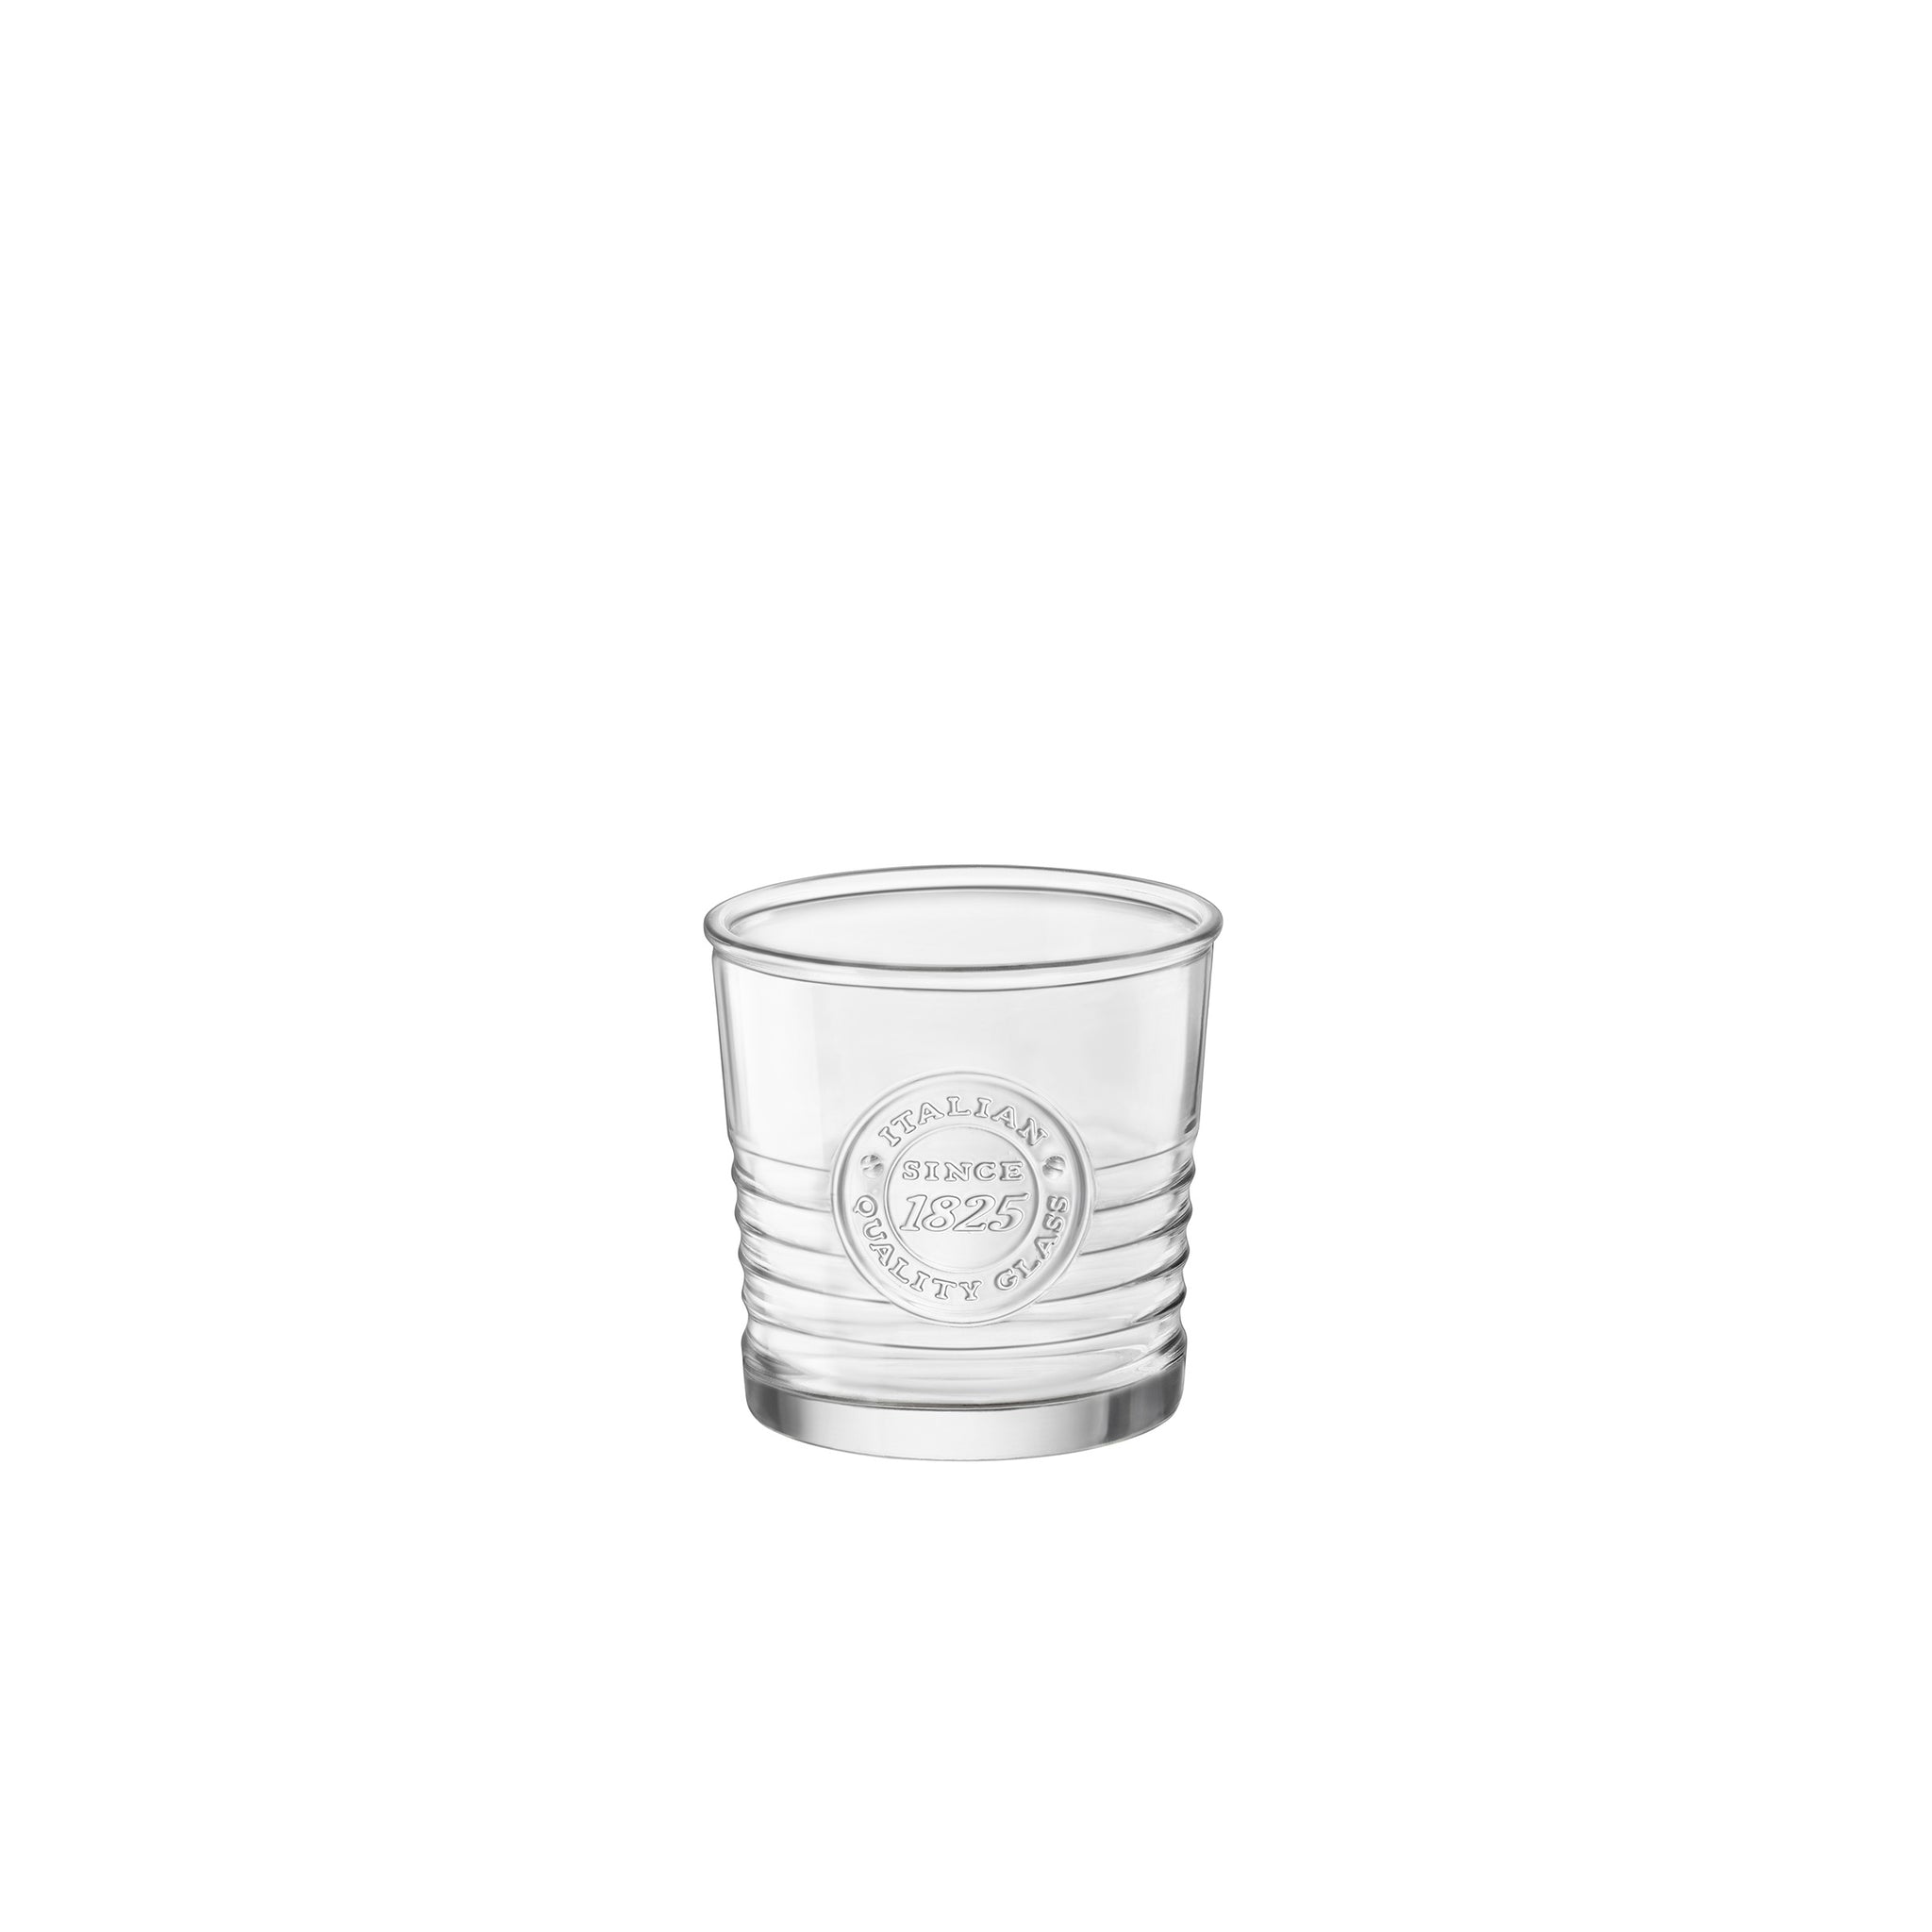 Officina 1825 10 oz. DOF Drinking Glasses (Set of 4)